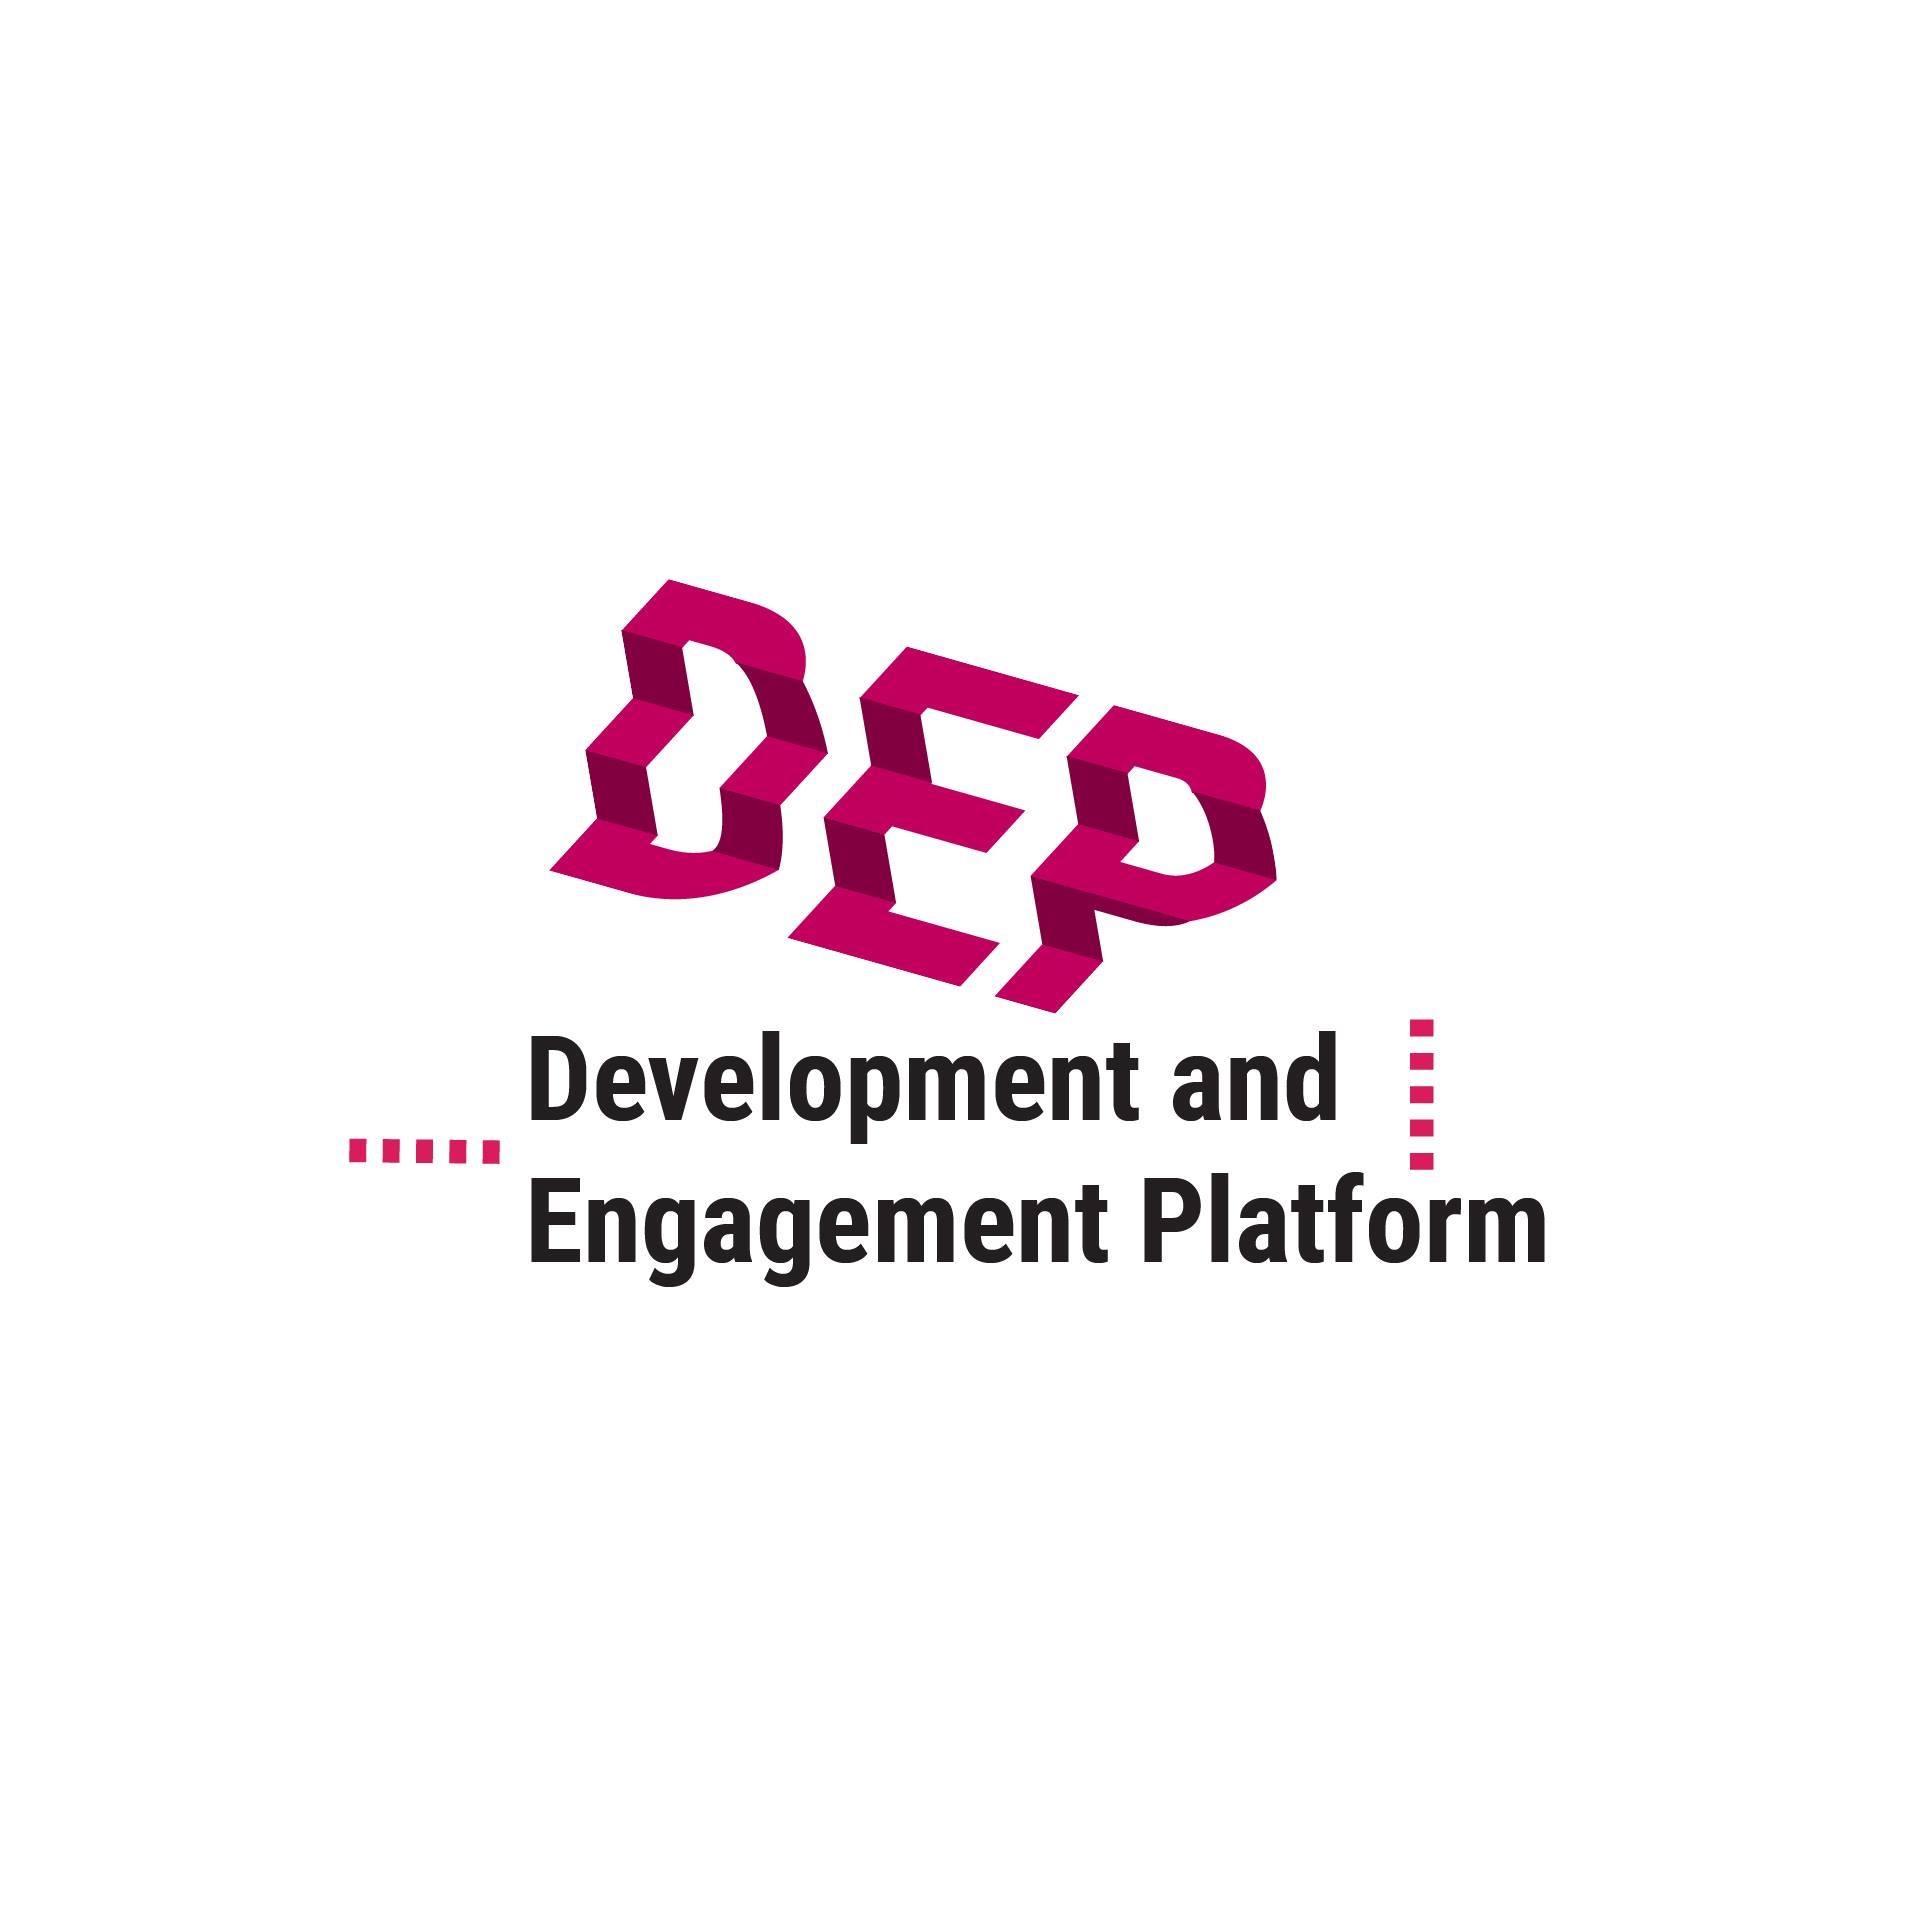 Development and Engagement Platform